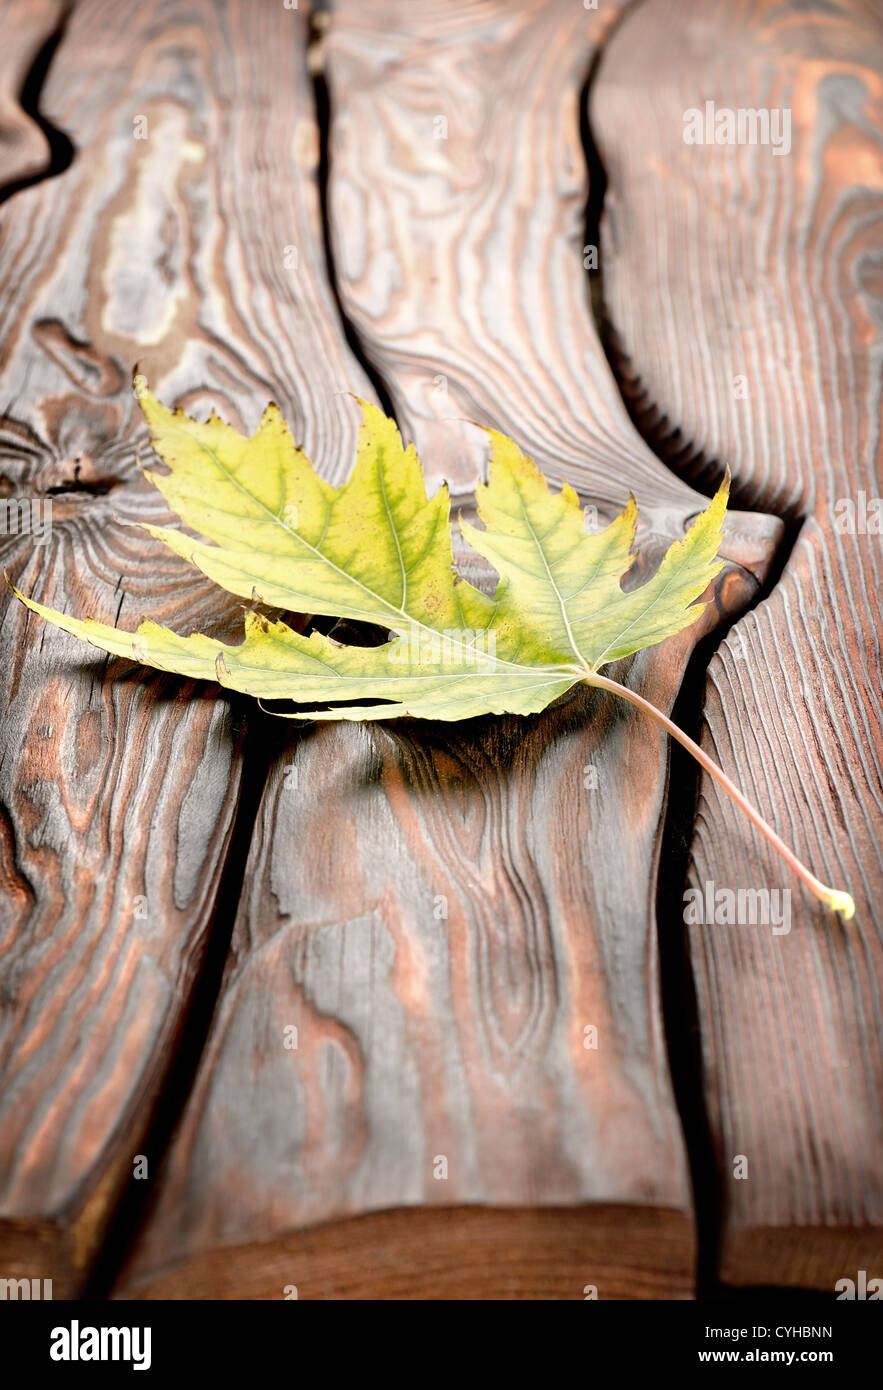 Autumn decoration on an old wooden surface Stock Photo